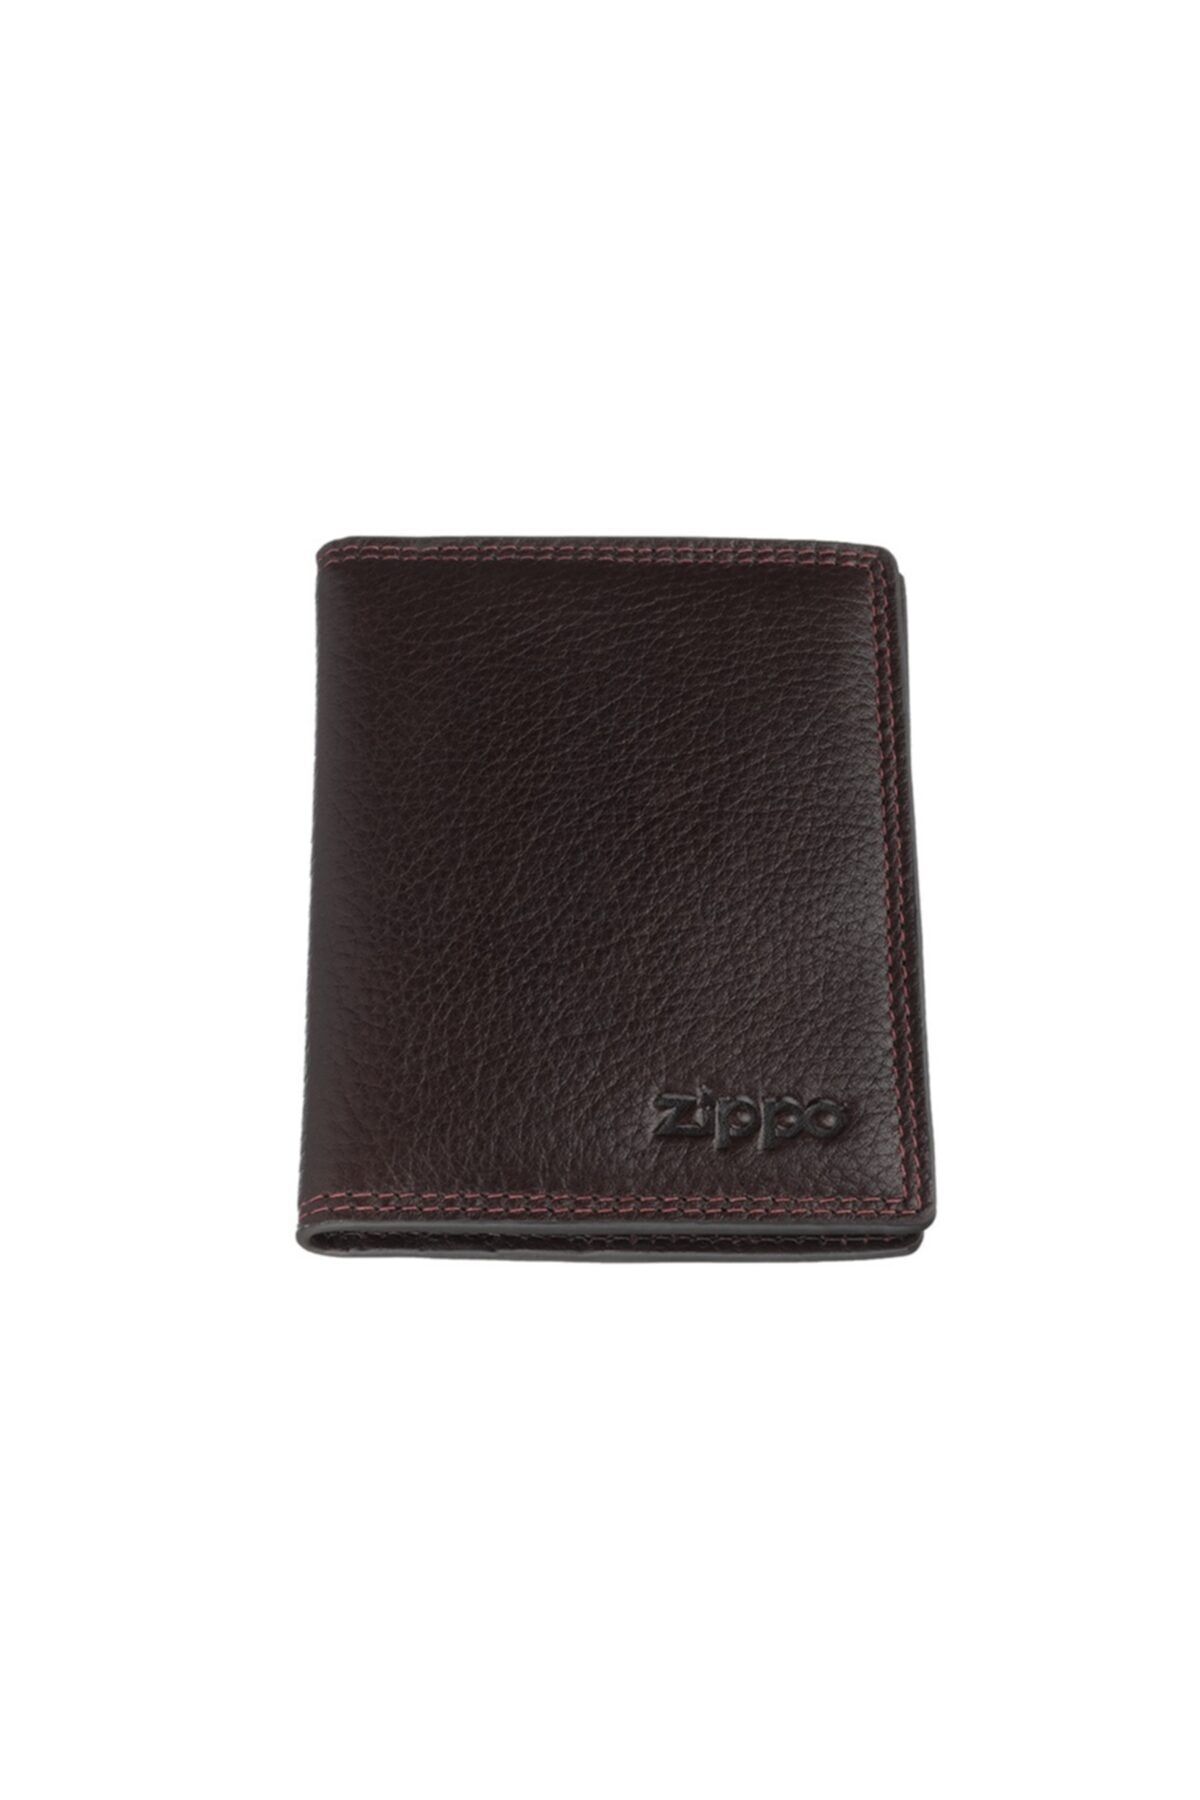 Zippo Credit Card Holder Brown 2006036